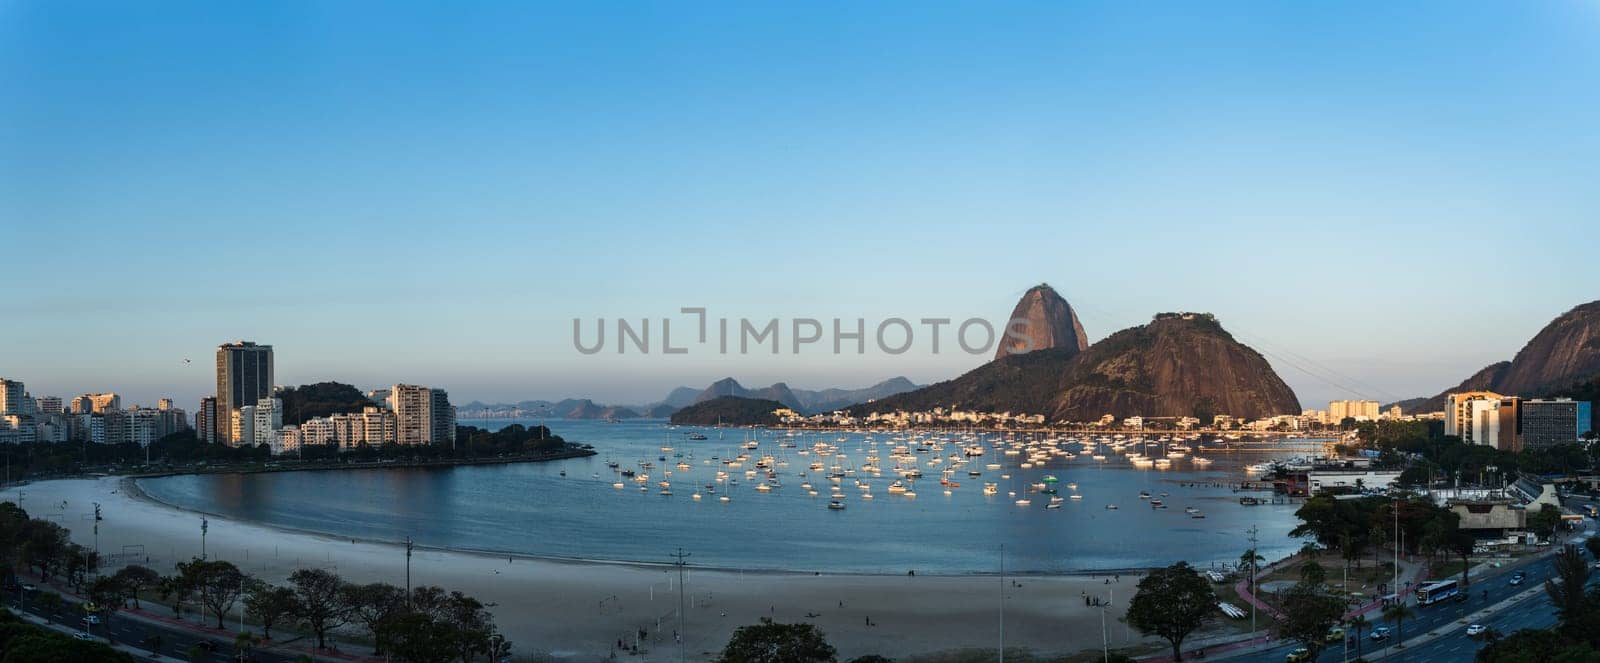 Sunset View of Botafogo Bay and Sugarloaf Mountain, Rio de Janeiro by FerradalFCG